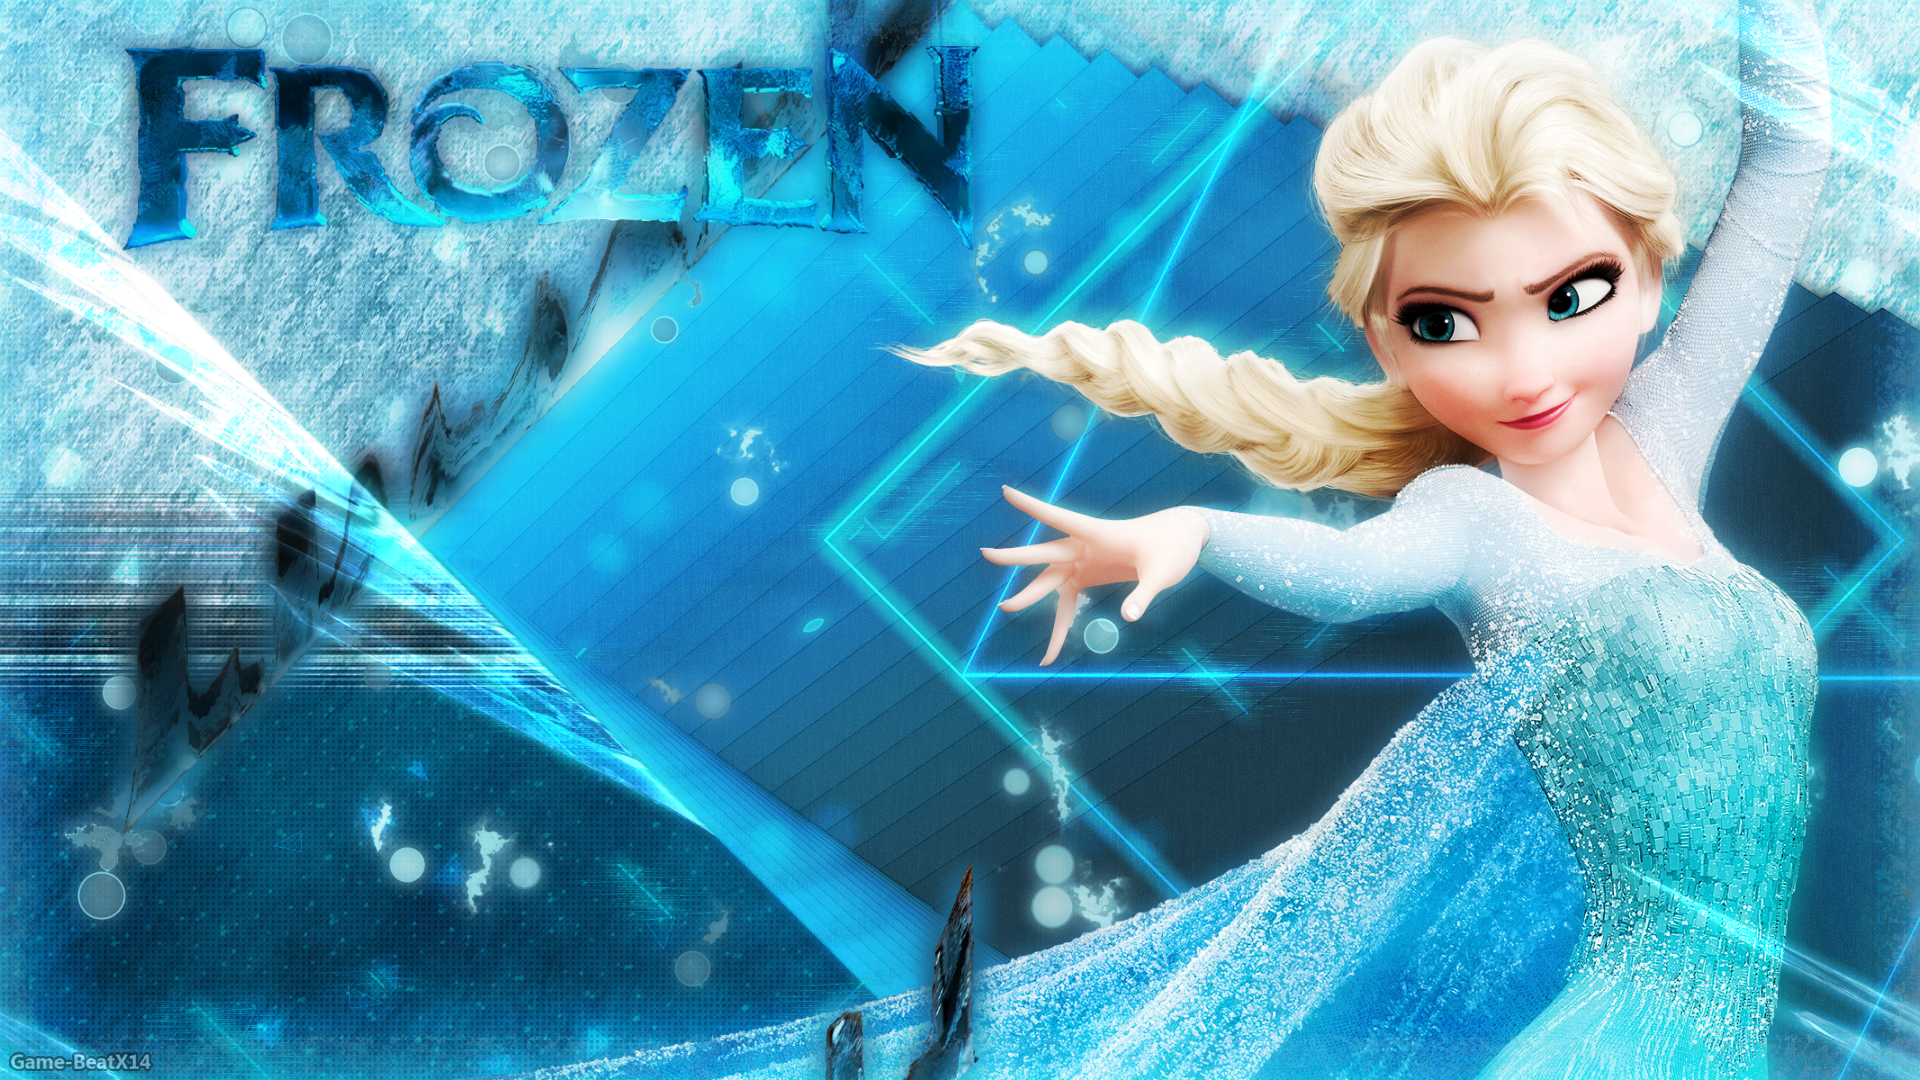 Movie Frozen HD Wallpaper by Game-BeatX14